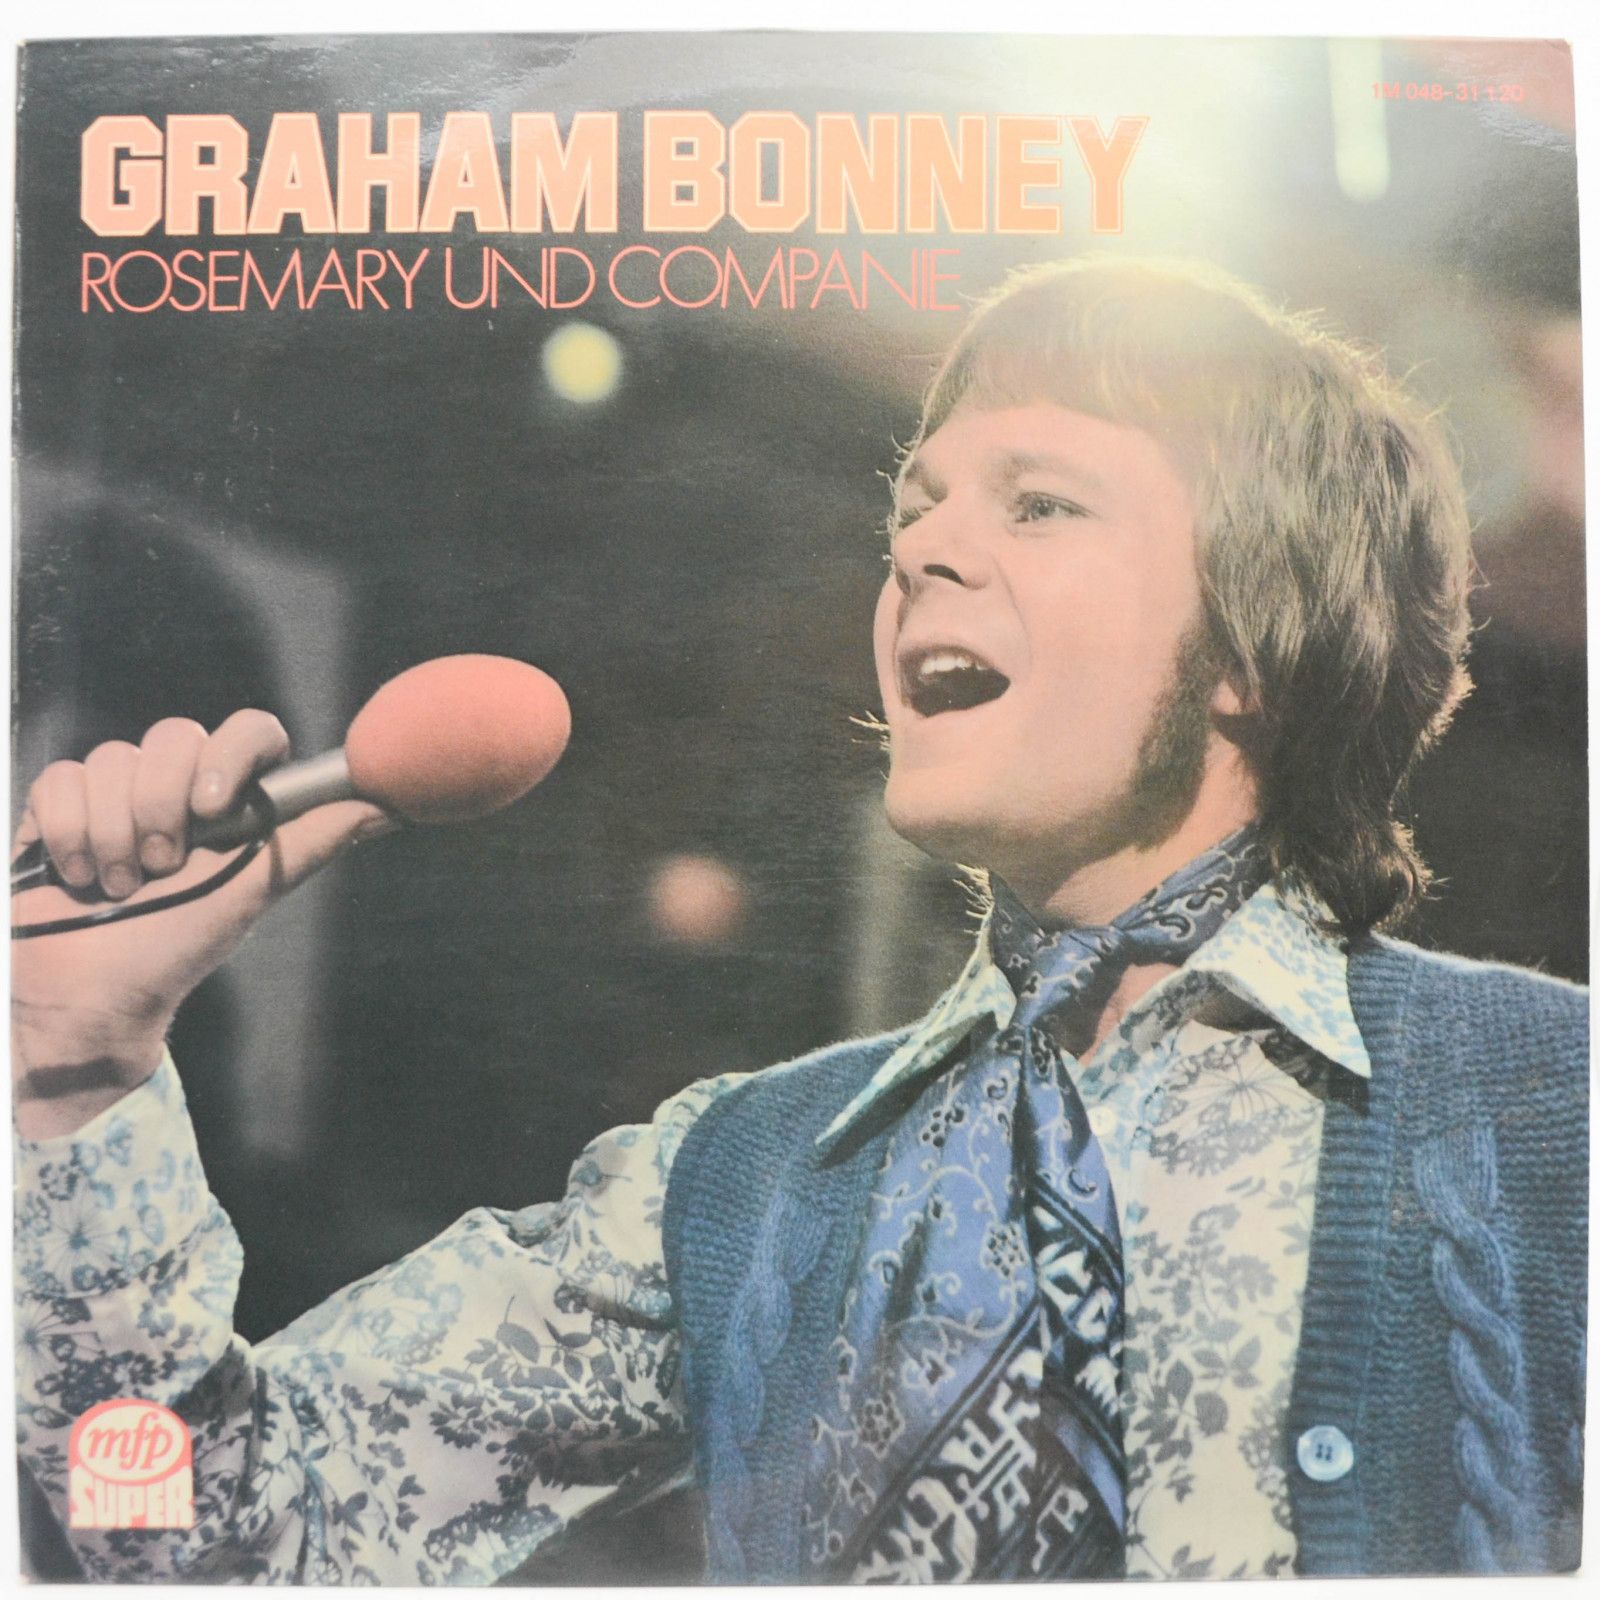 Graham Bonney — Rosemary und Companie, 1973